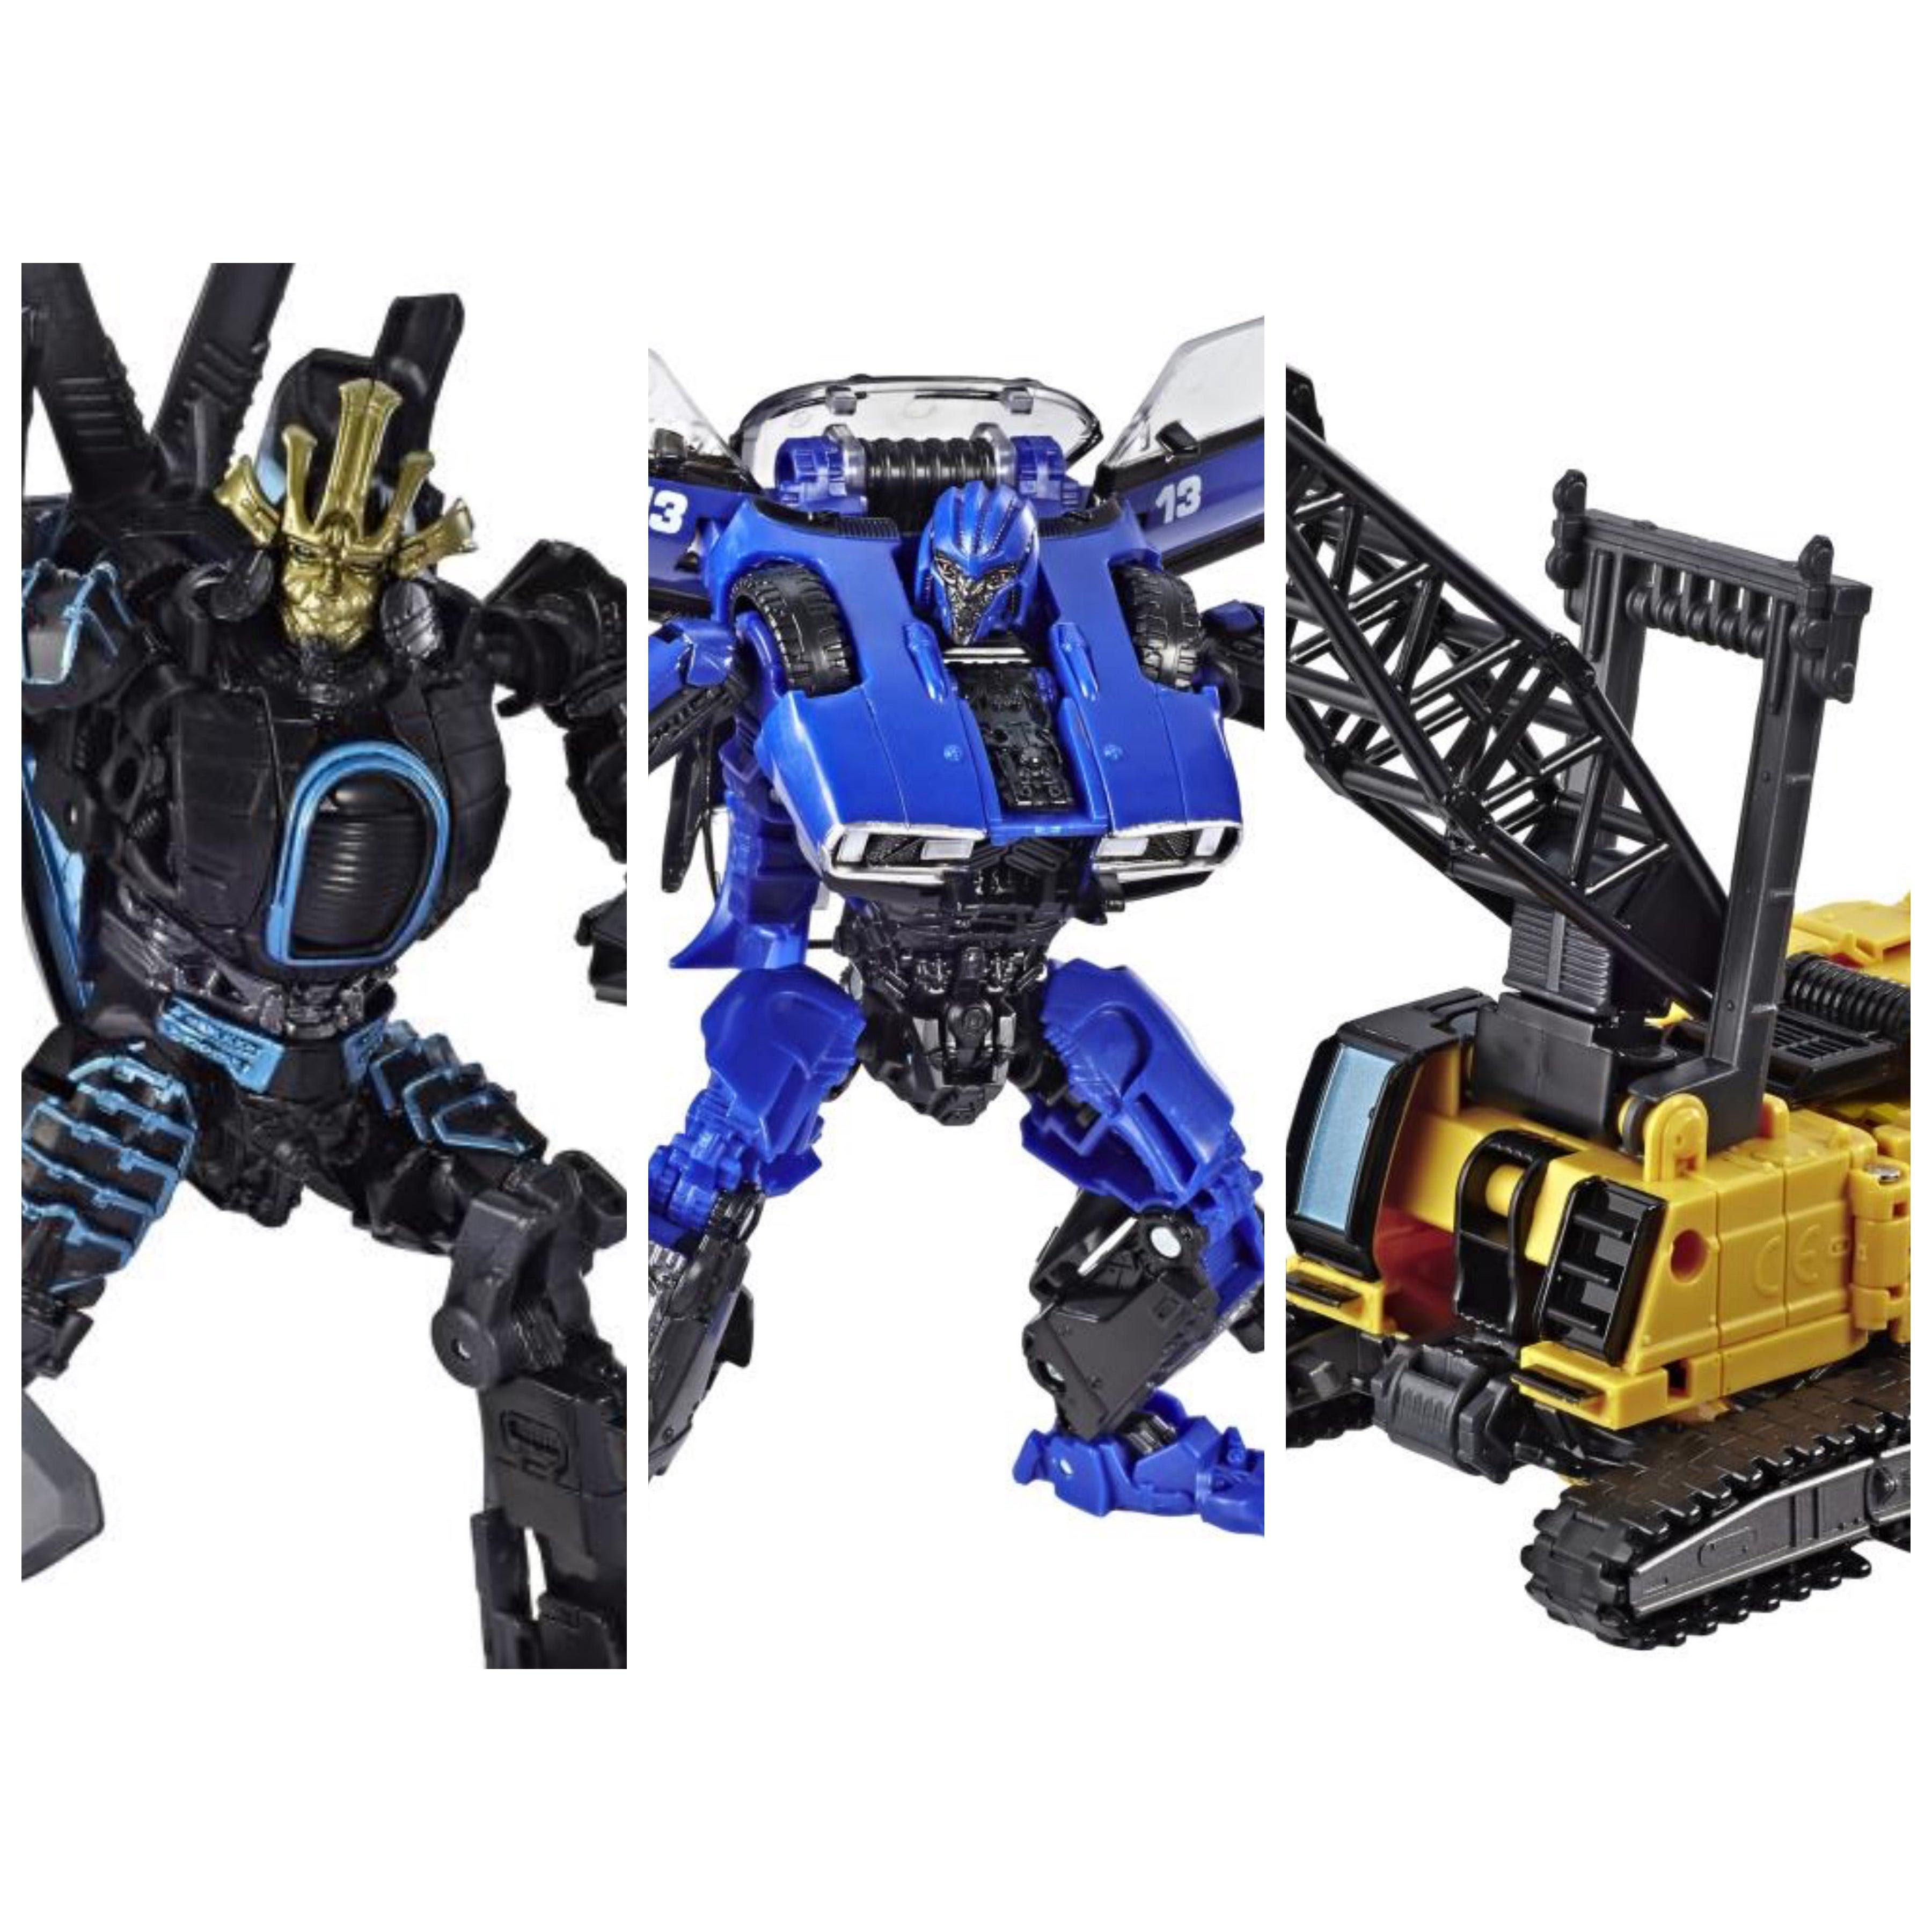 Image of Transformers Studio Series Premier Deluxe Wave 7 Set of 3